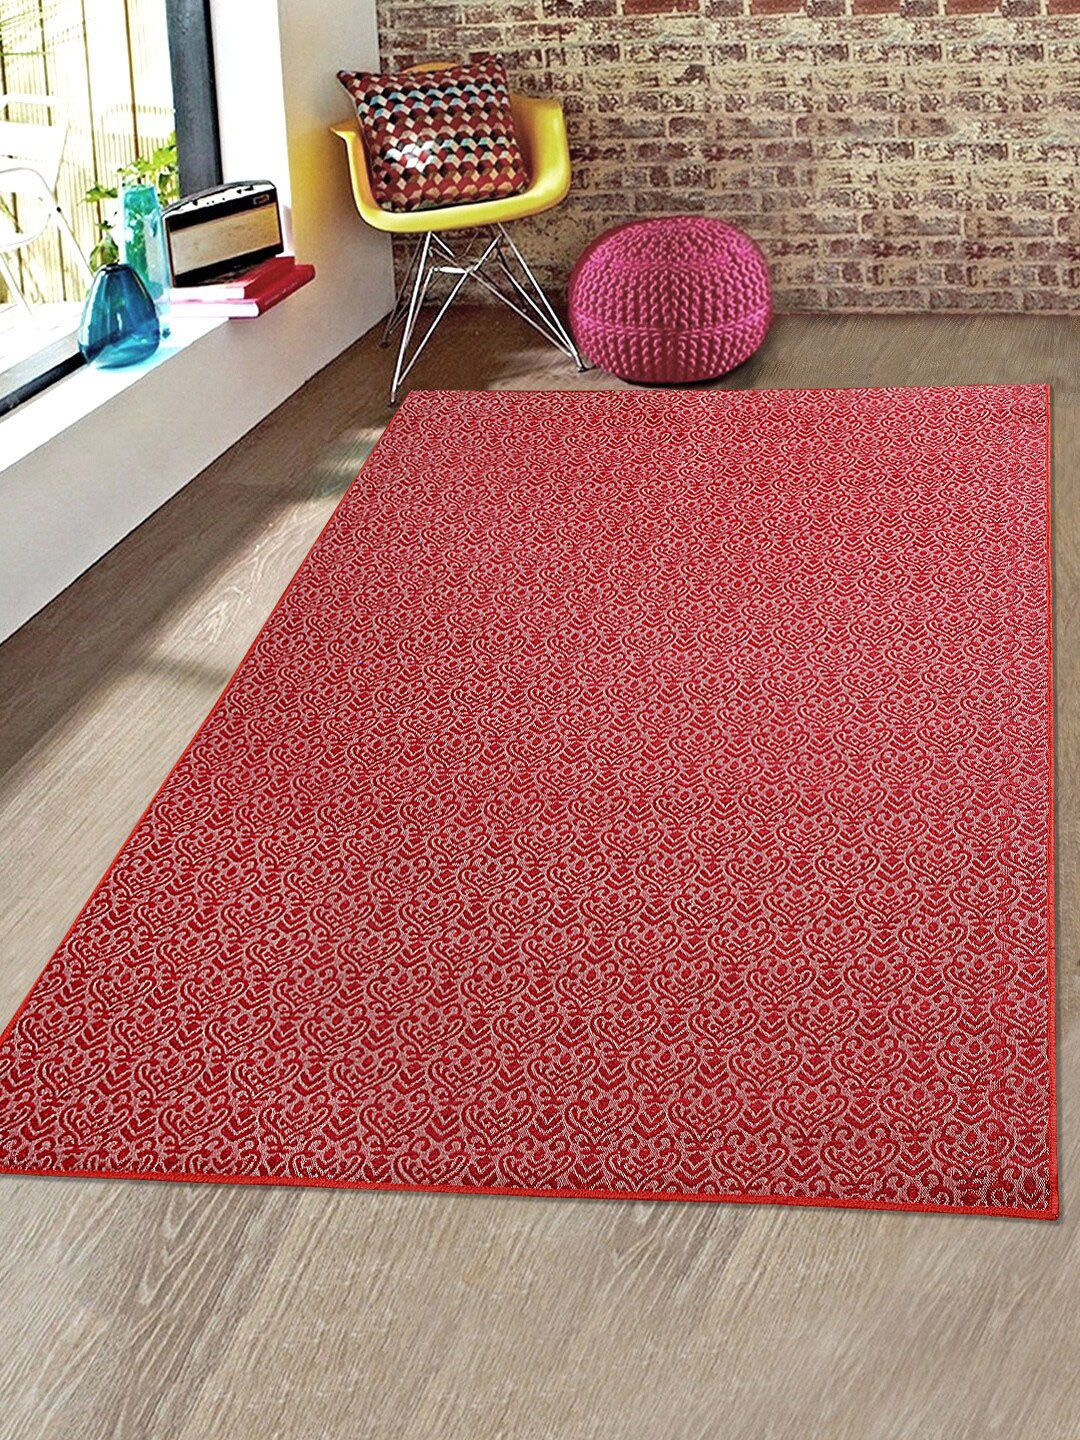 Saral Home Red & White Ethnic Motifs Anti-Skid Carpet Price in India